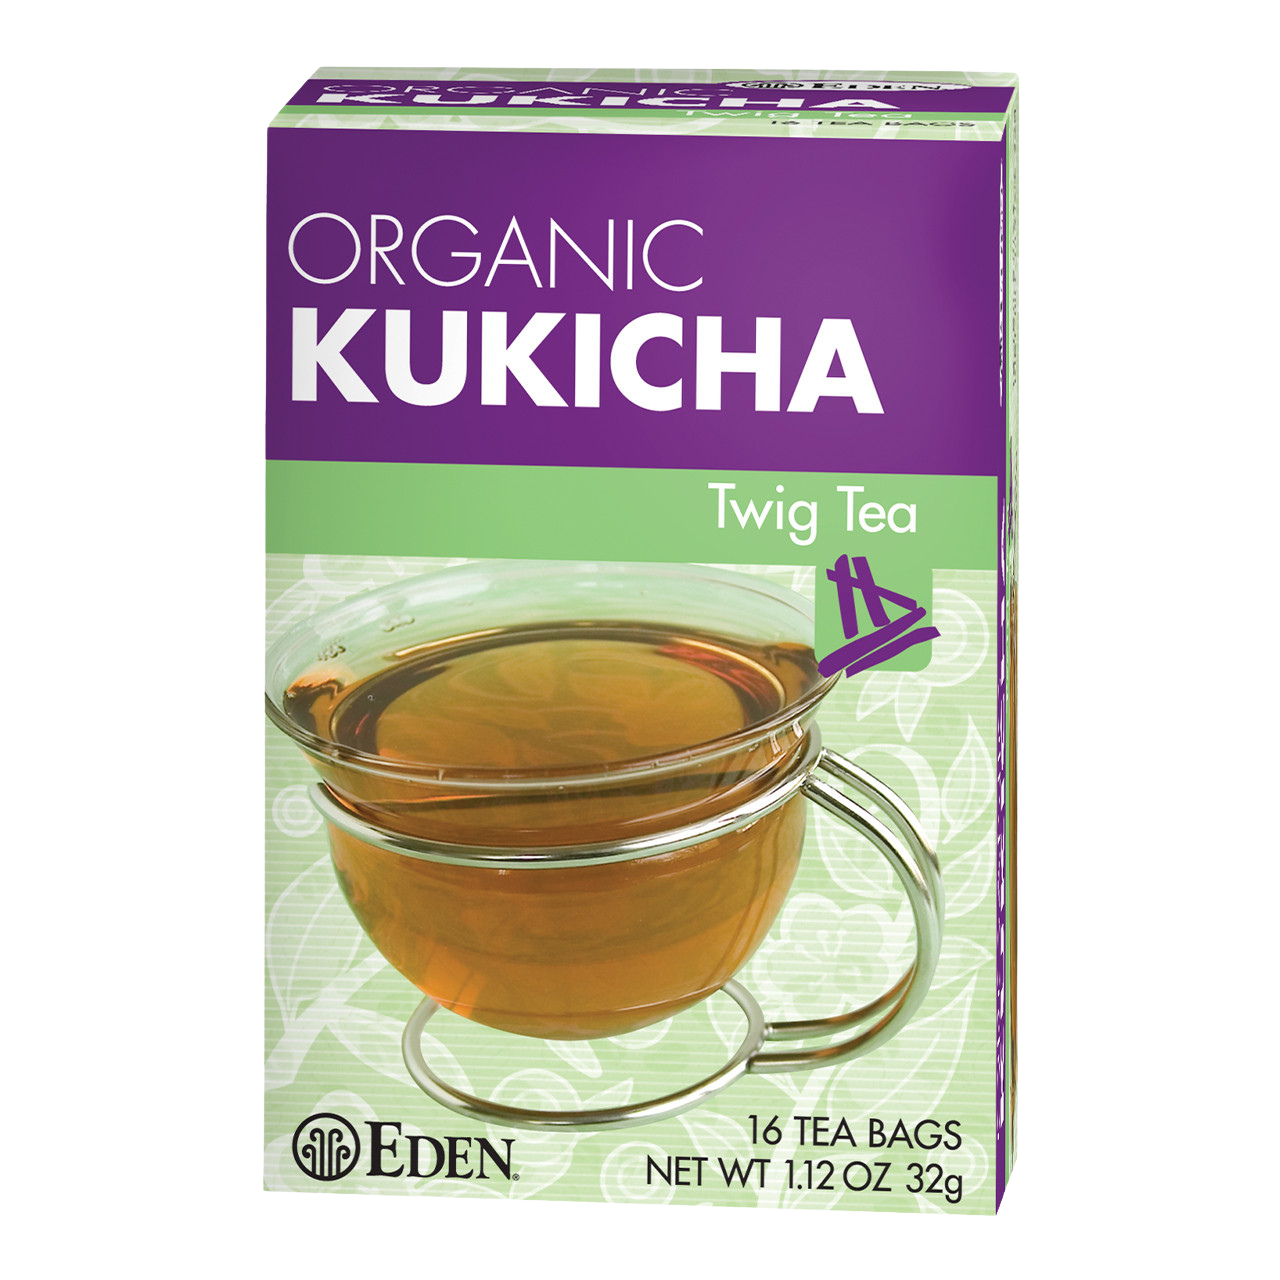 Organic Kukicha Twig Tea - 16 BG